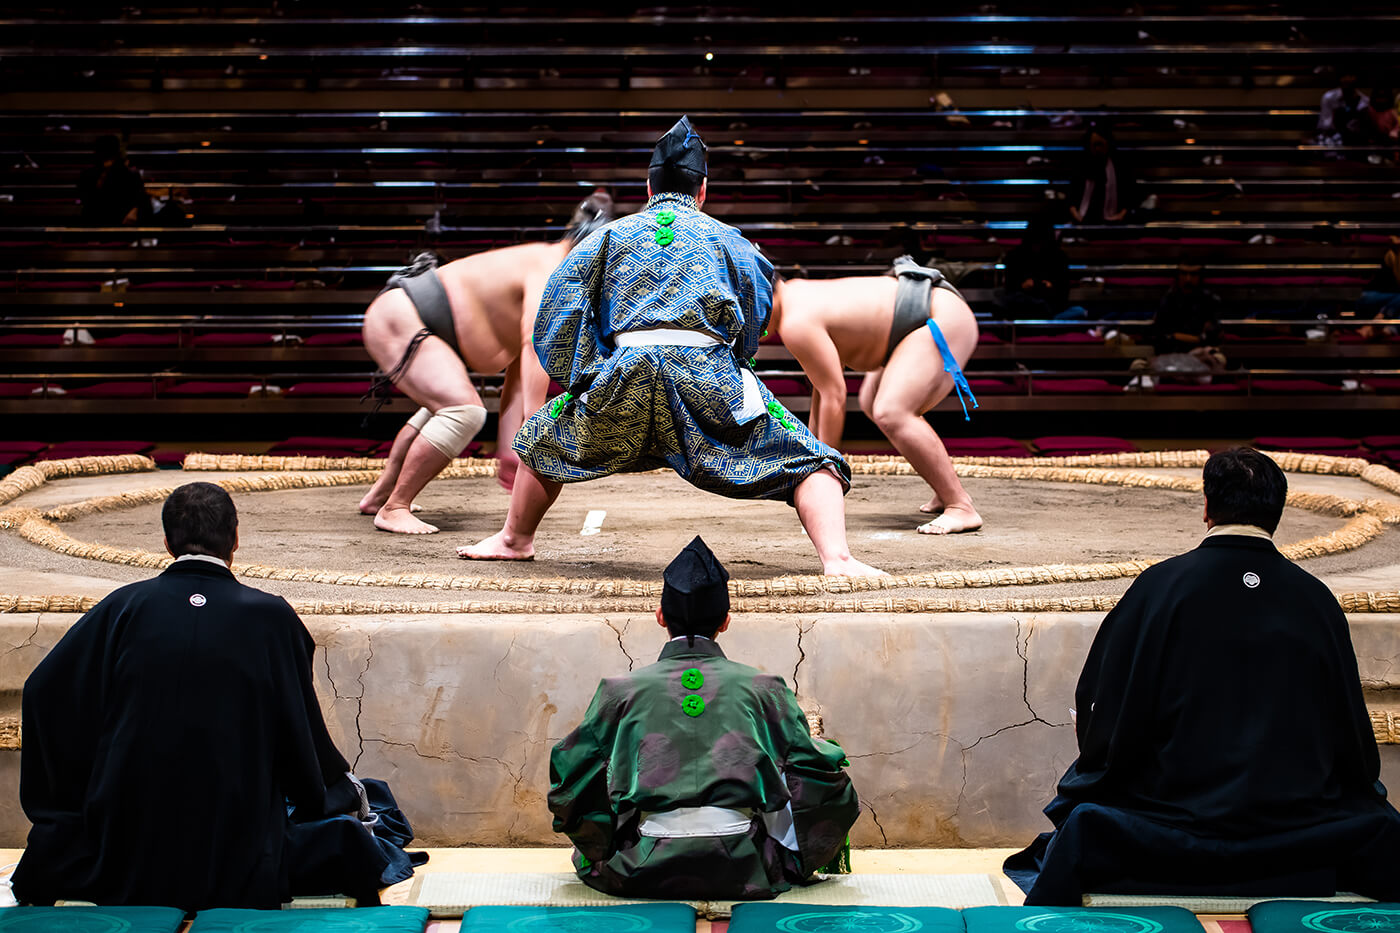 Sumo Deporte Japon S Tradicional Viaje A Jap N